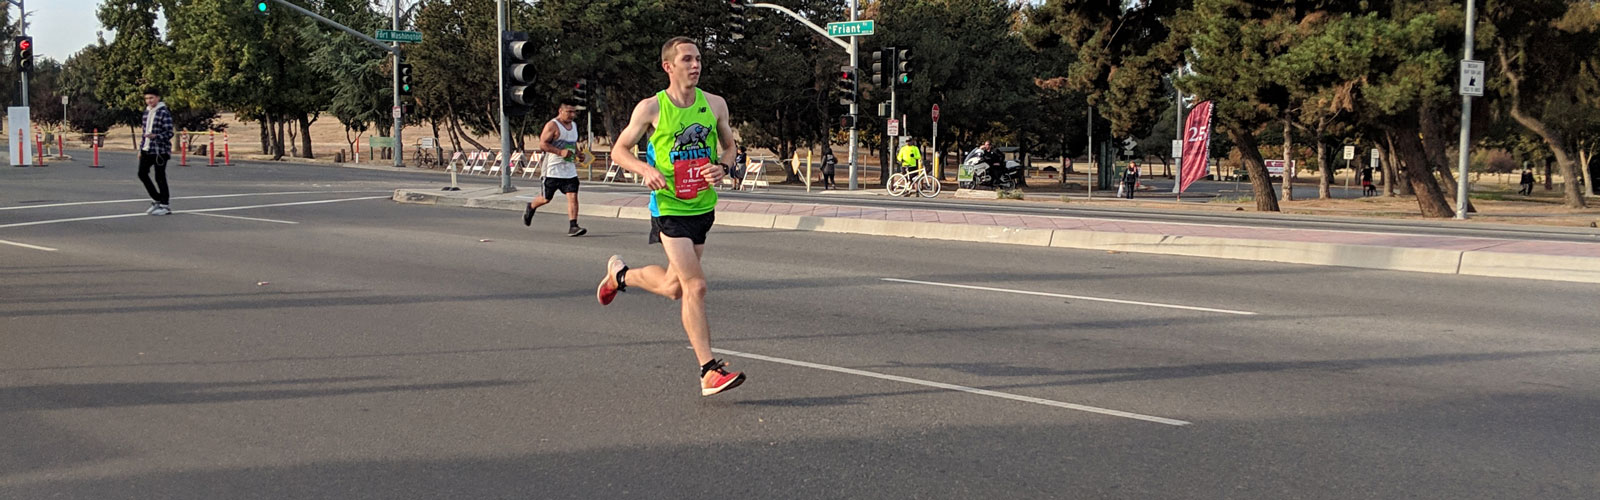 CJ Albertson running in the Two Cities Marathon